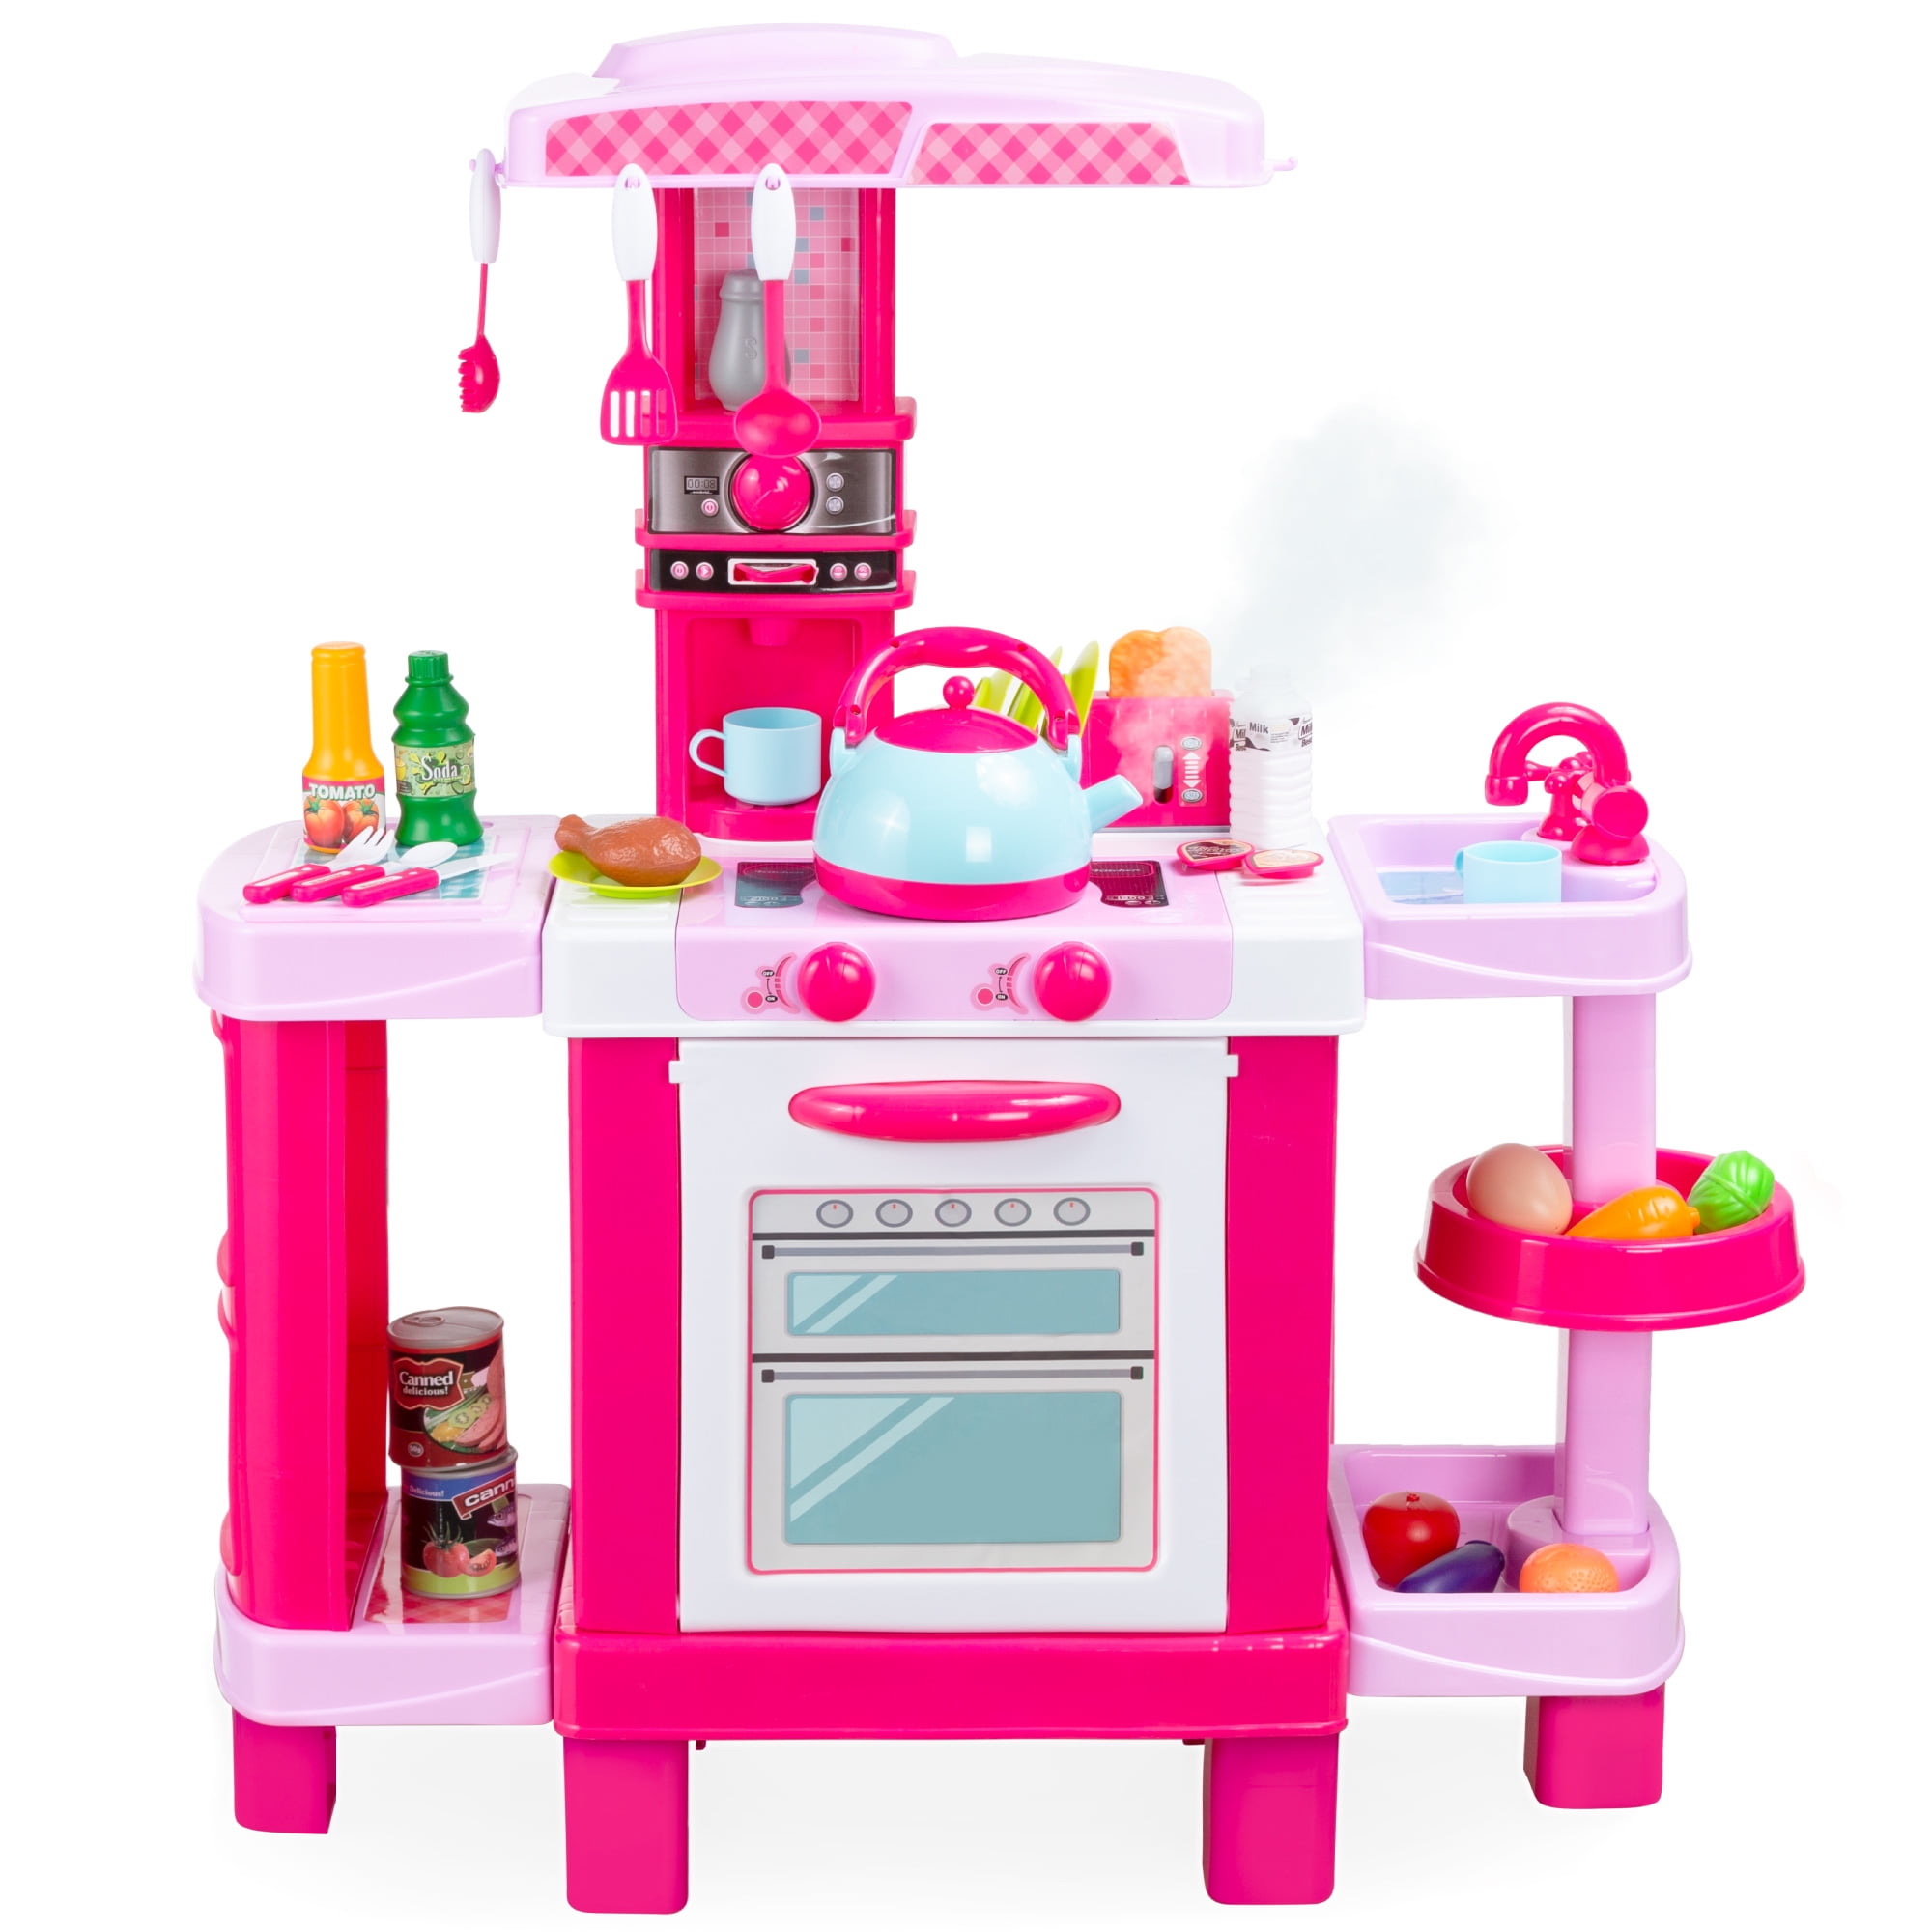 Walmart Kitchen Set Toys Accessories For Ipad / Play Kitchen